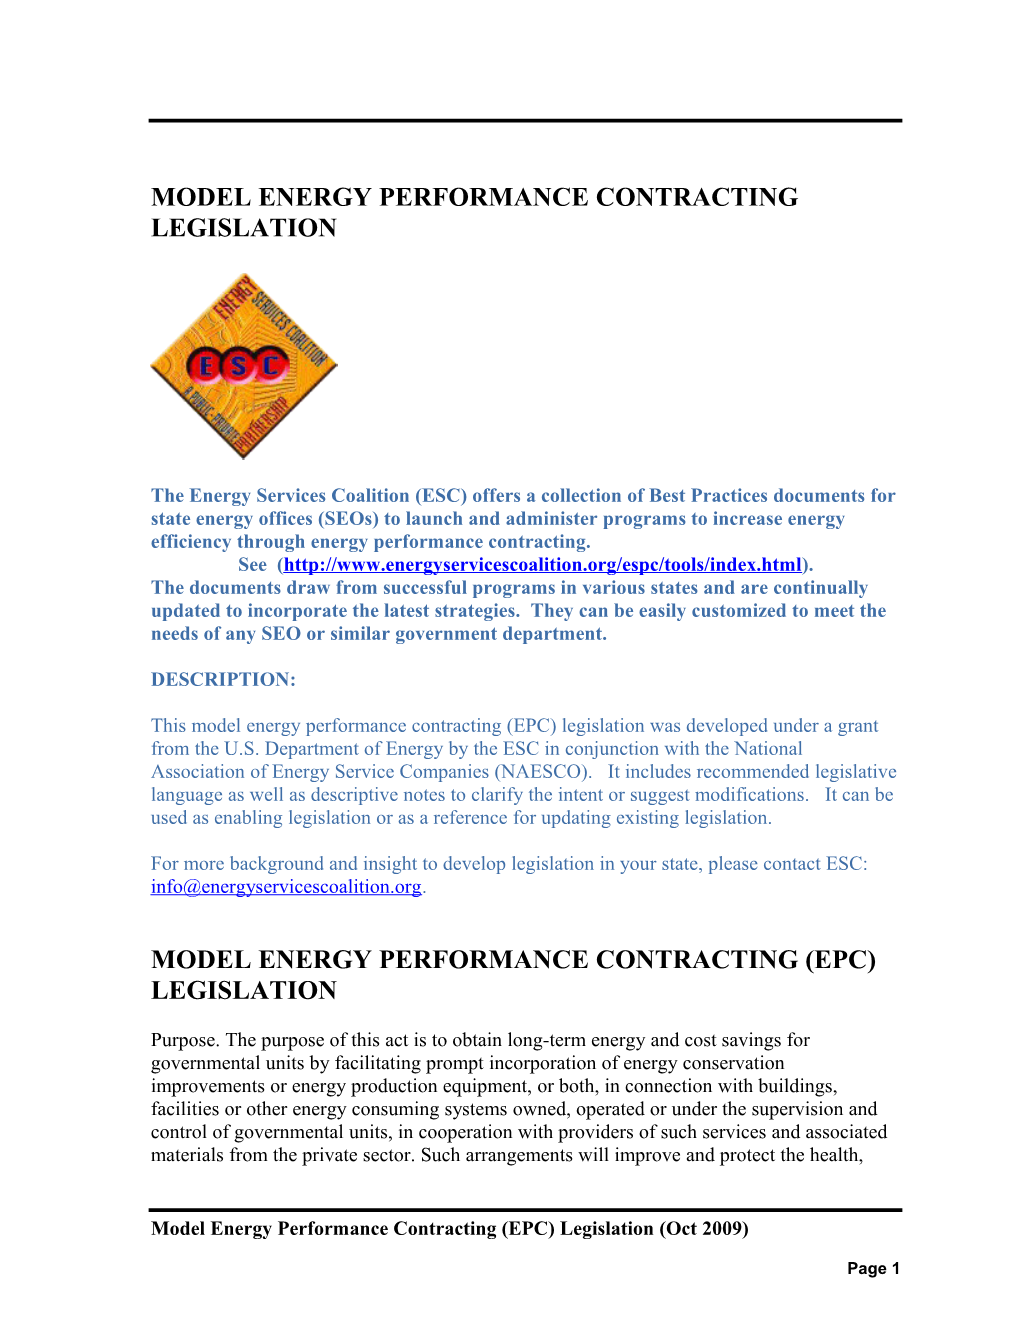 Model Energy Performance Contracting Legislation